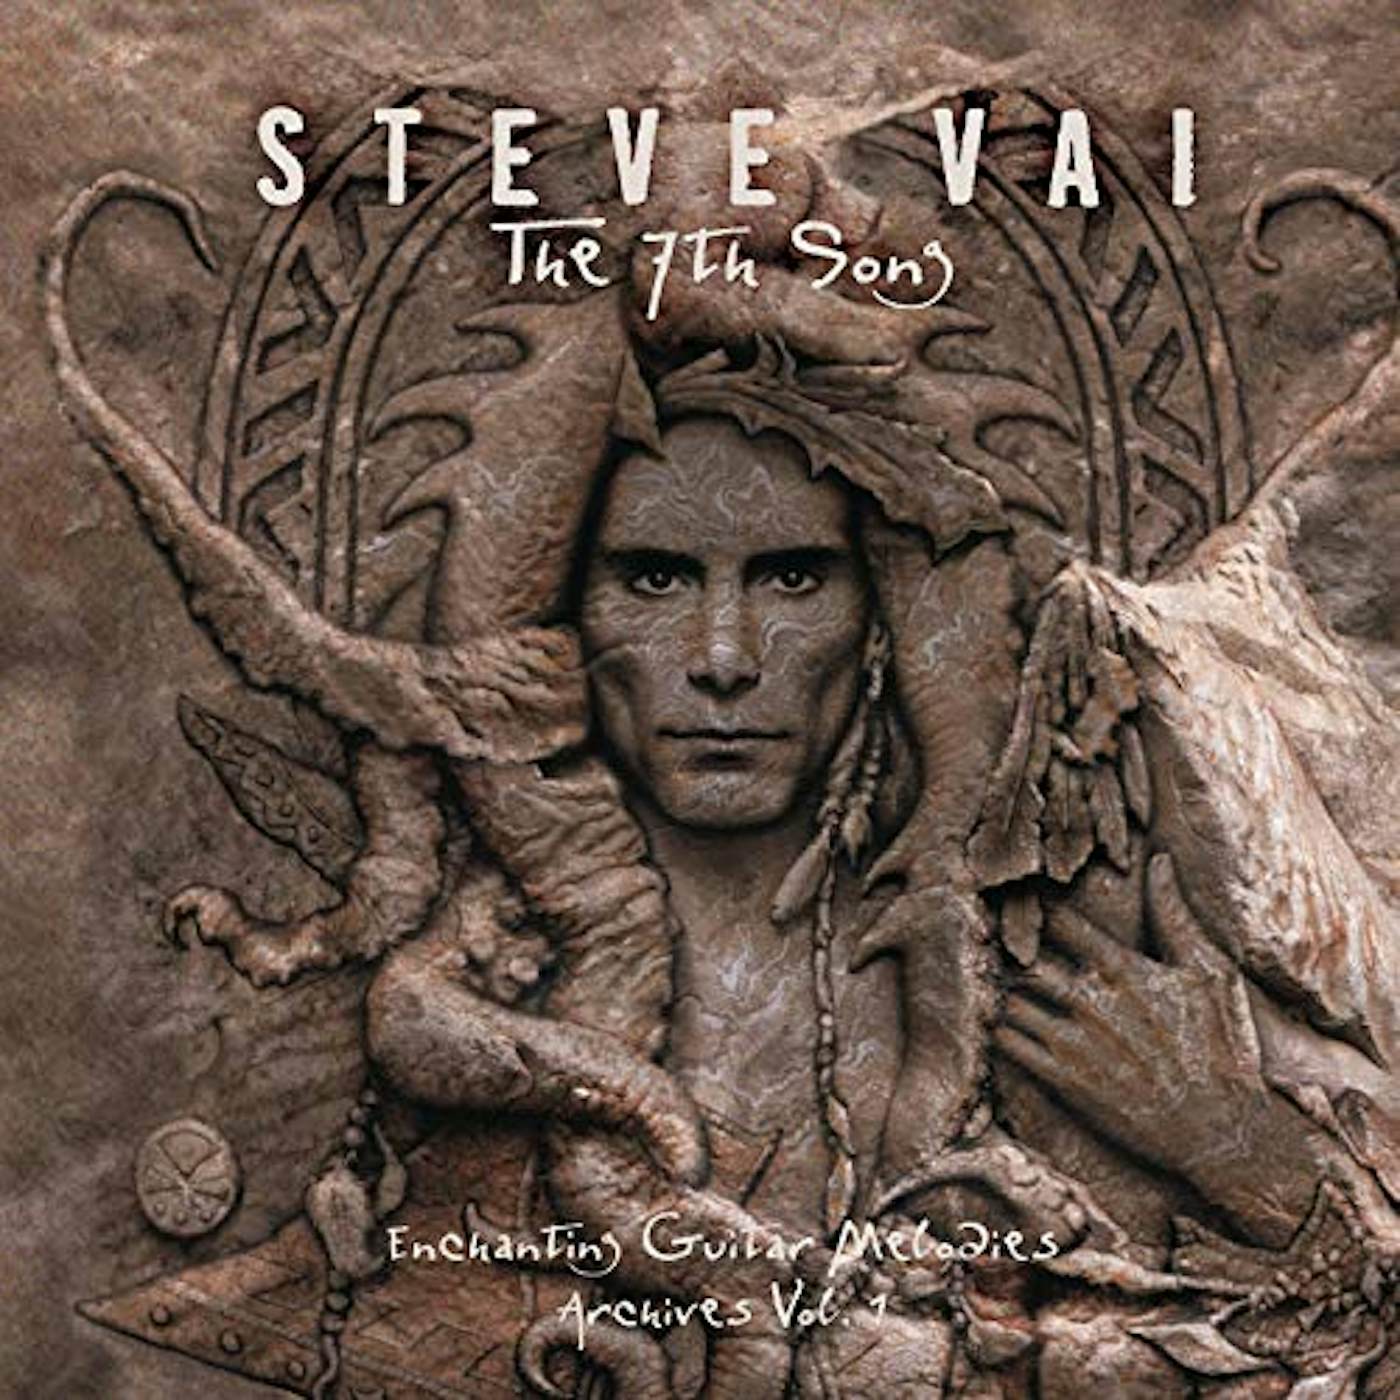 Steve Vai SEVENTH SONG CD